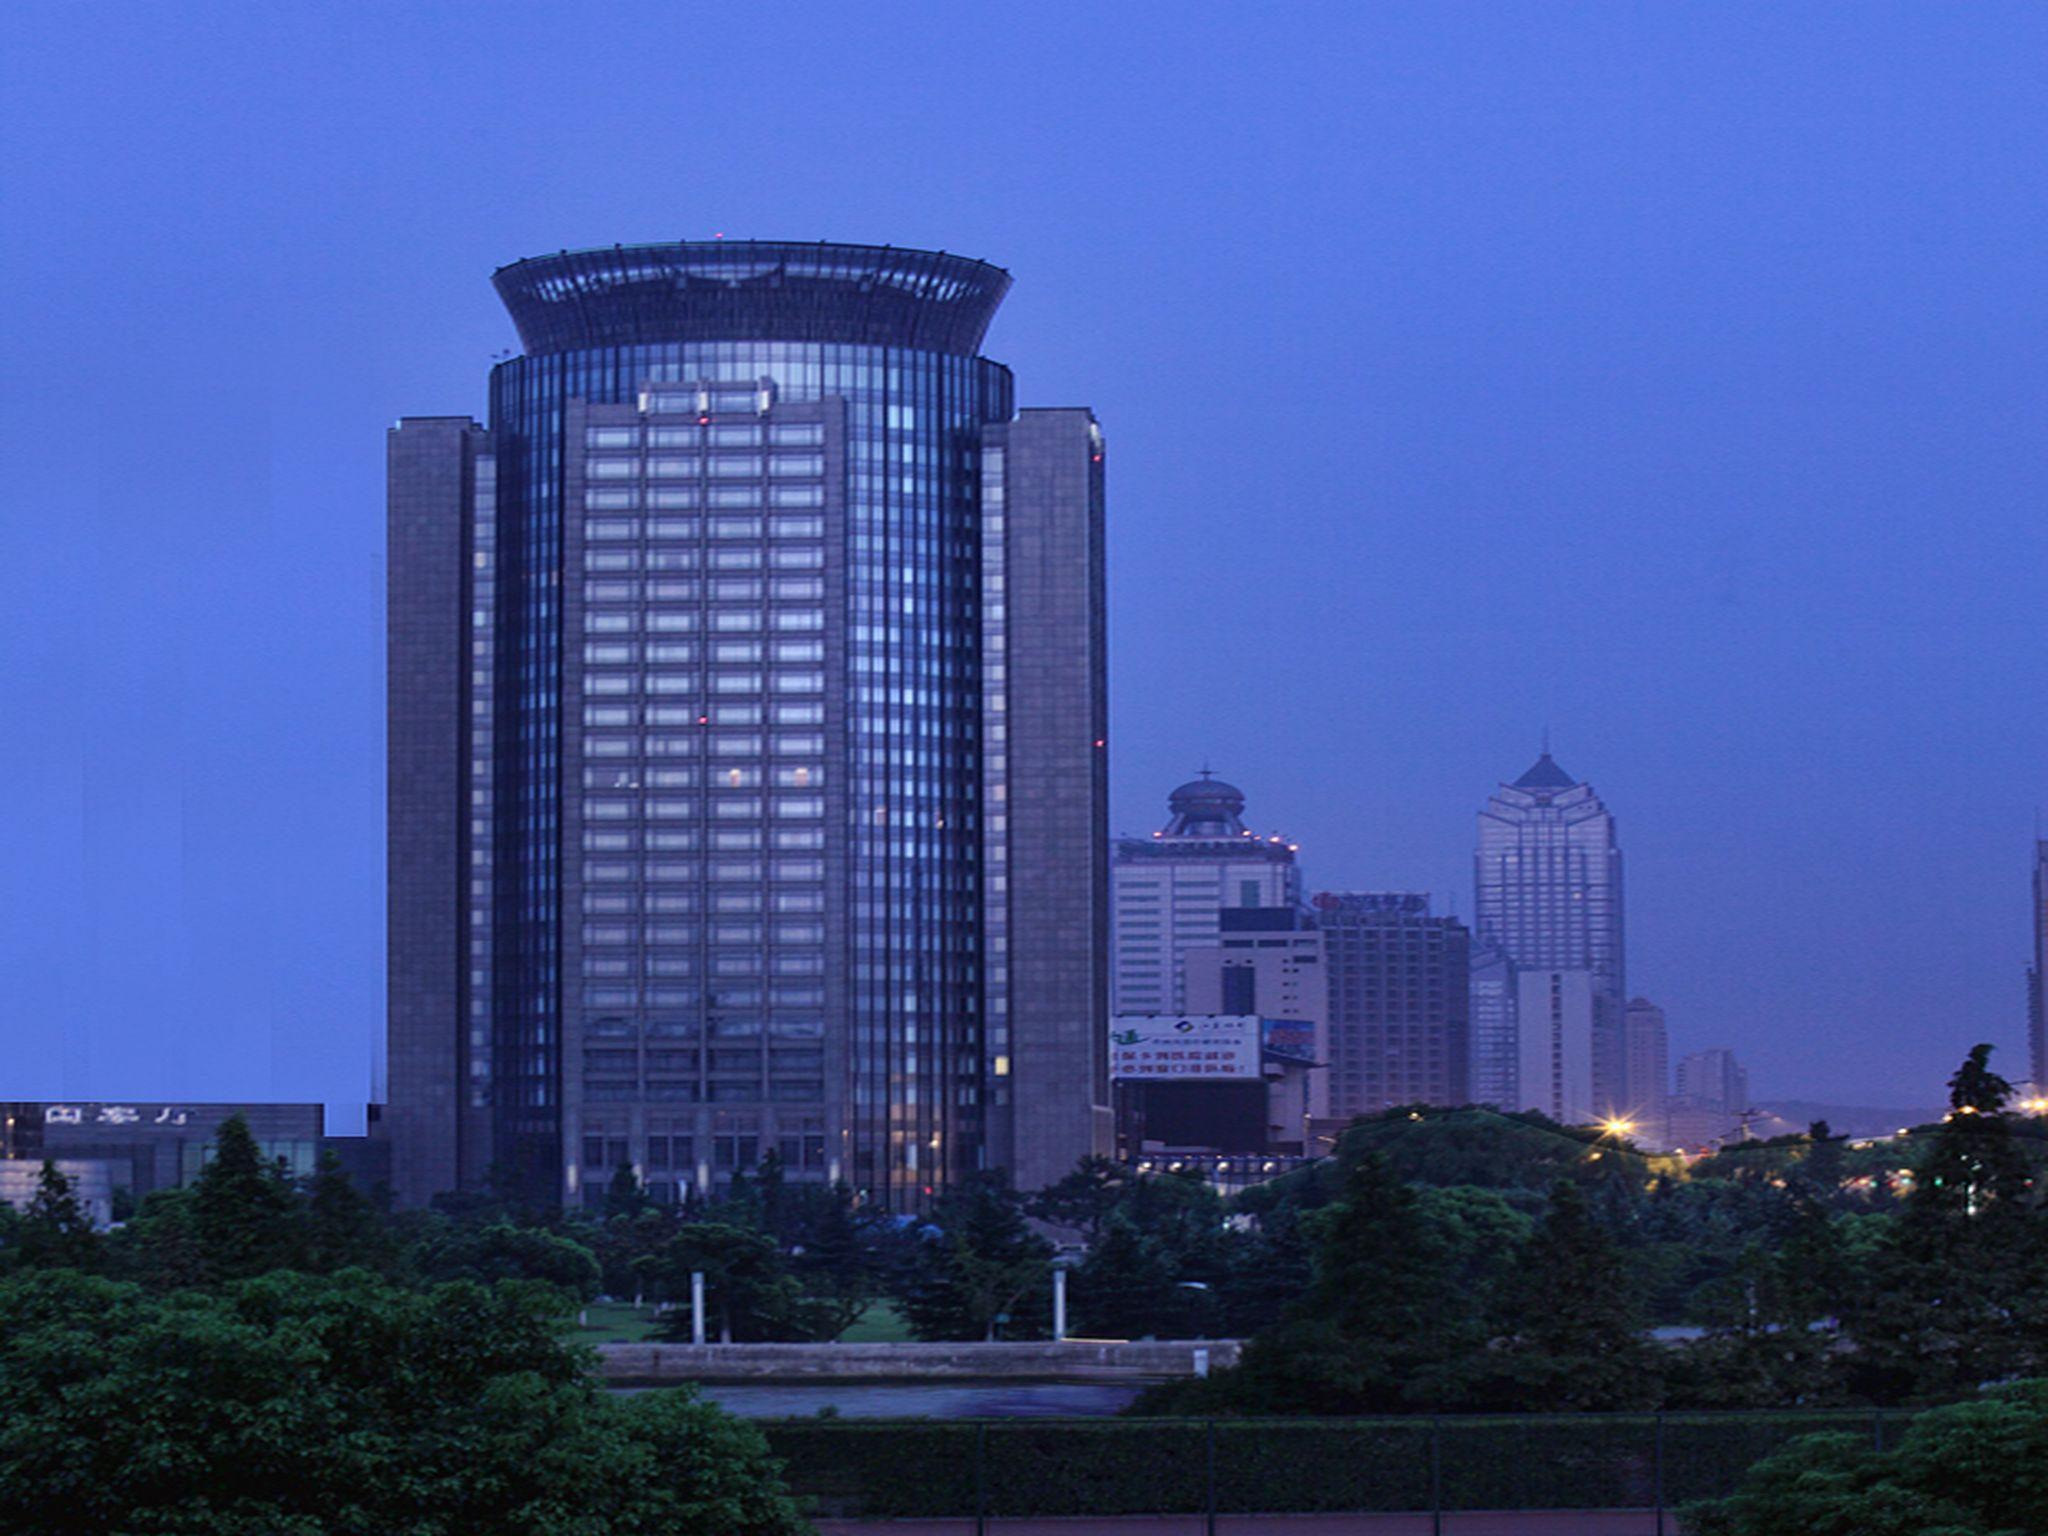 New City Garden Hotel - Suzhou